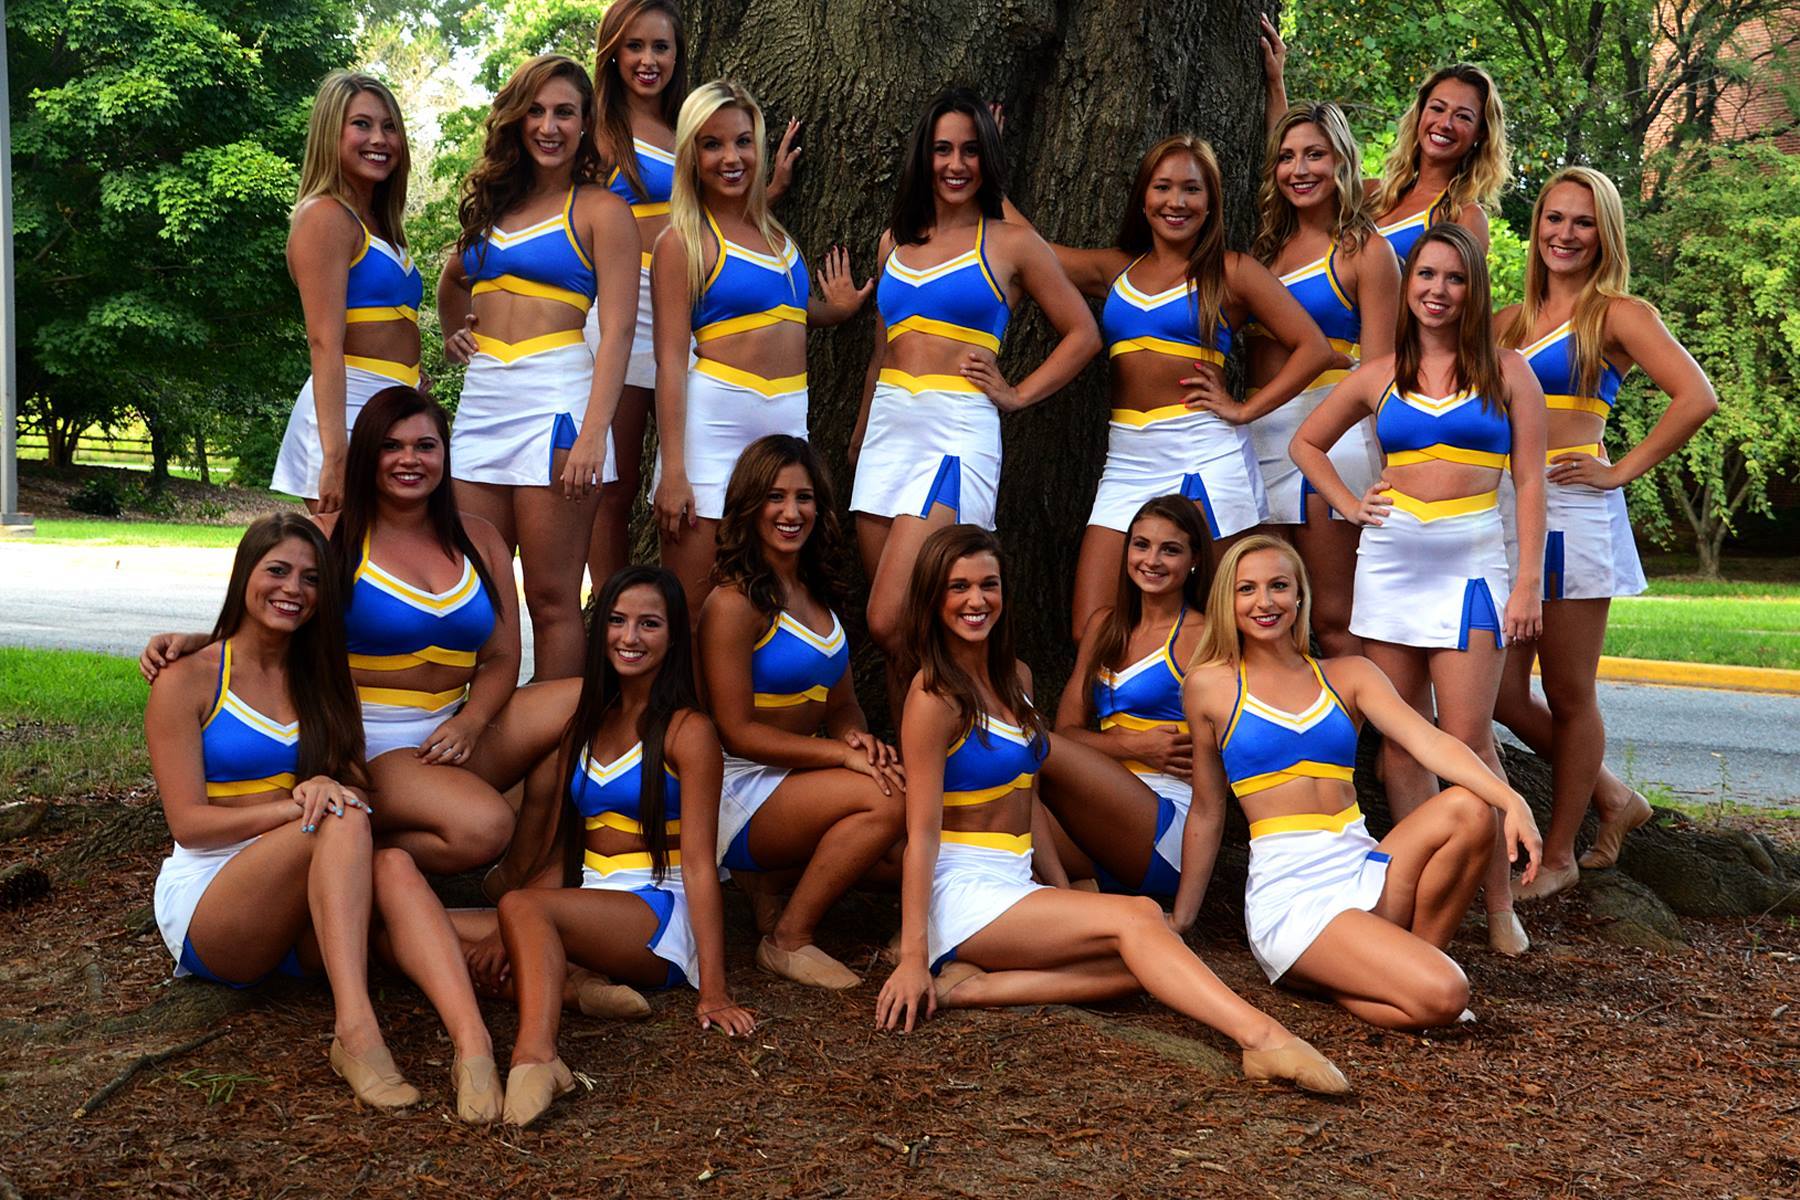 University Dancers. Team University. UCLA program & Dancing.